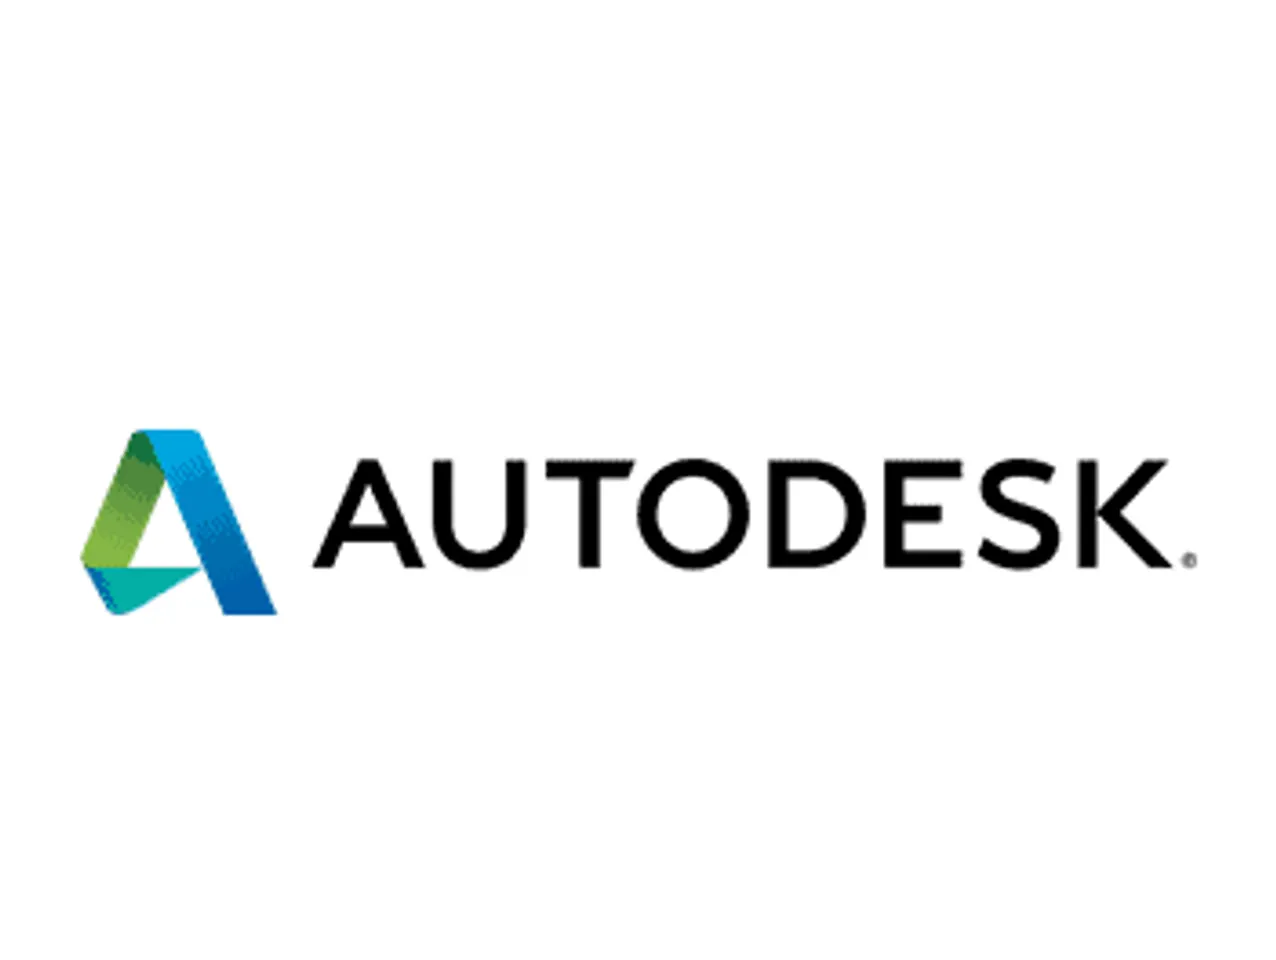 autodesk logo